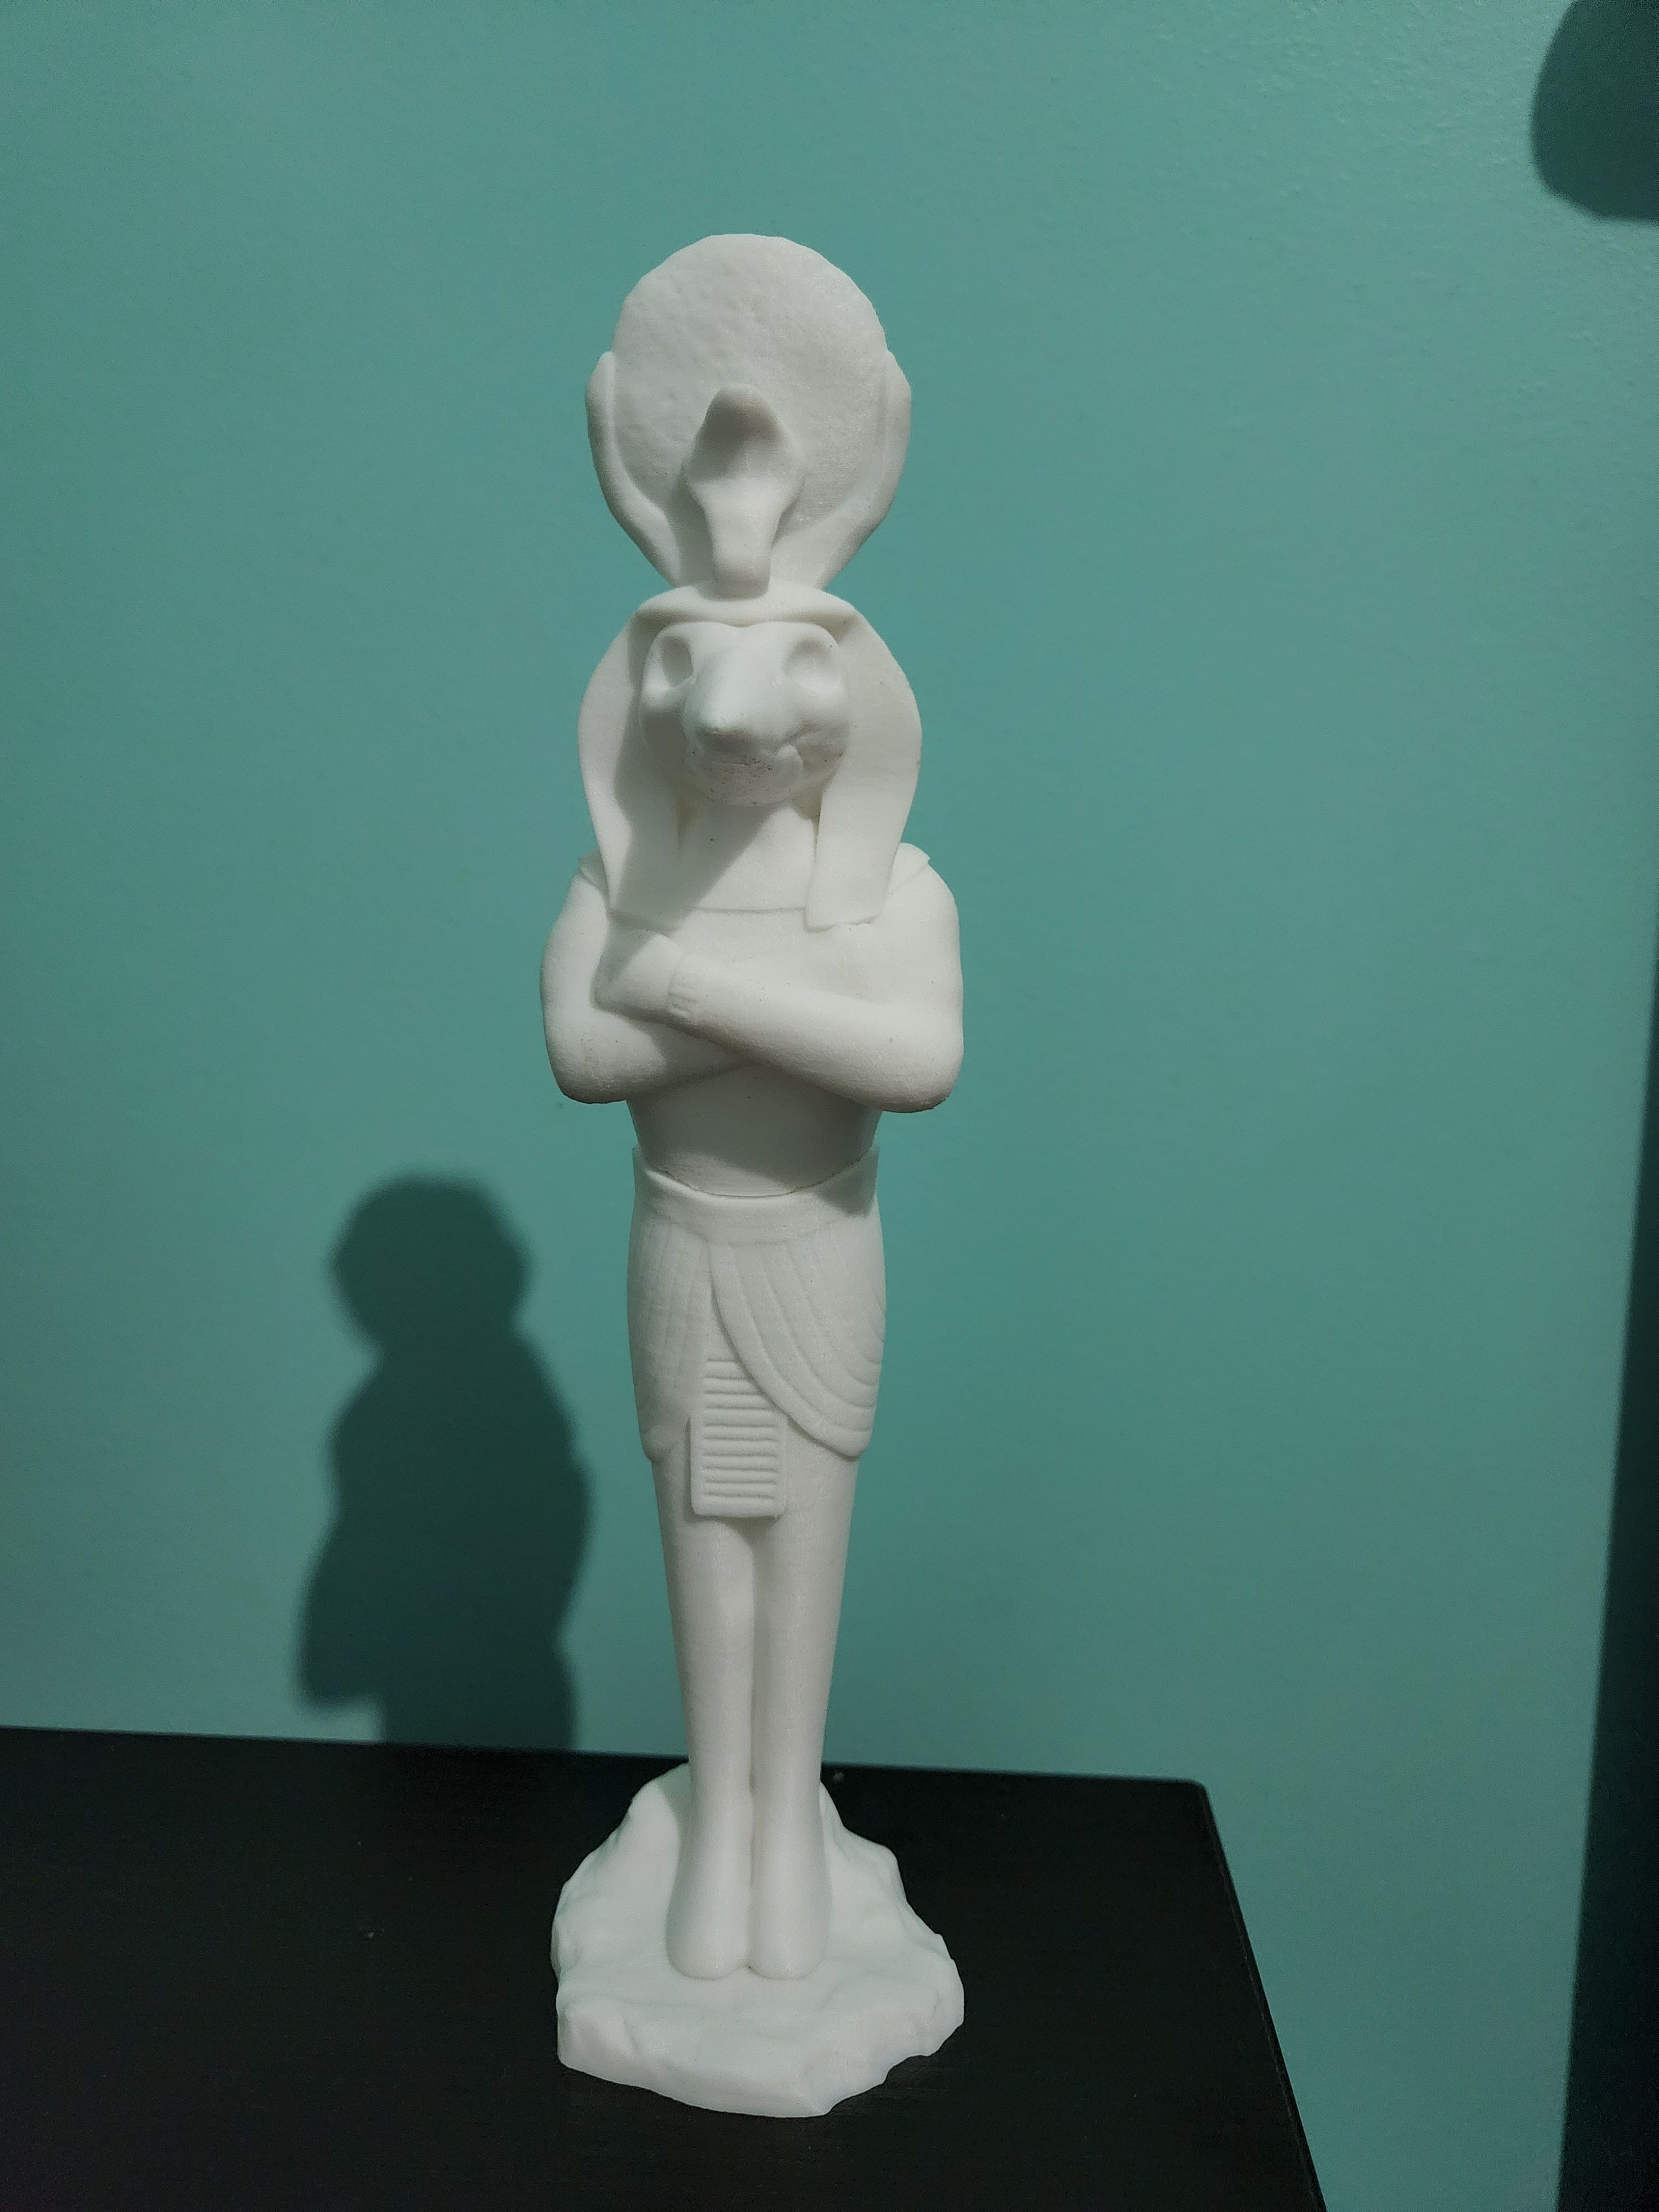 20220419_171236.jpg Download free STL file Moon Knight Khonshu Statue • 3D printing template, Gumbercules